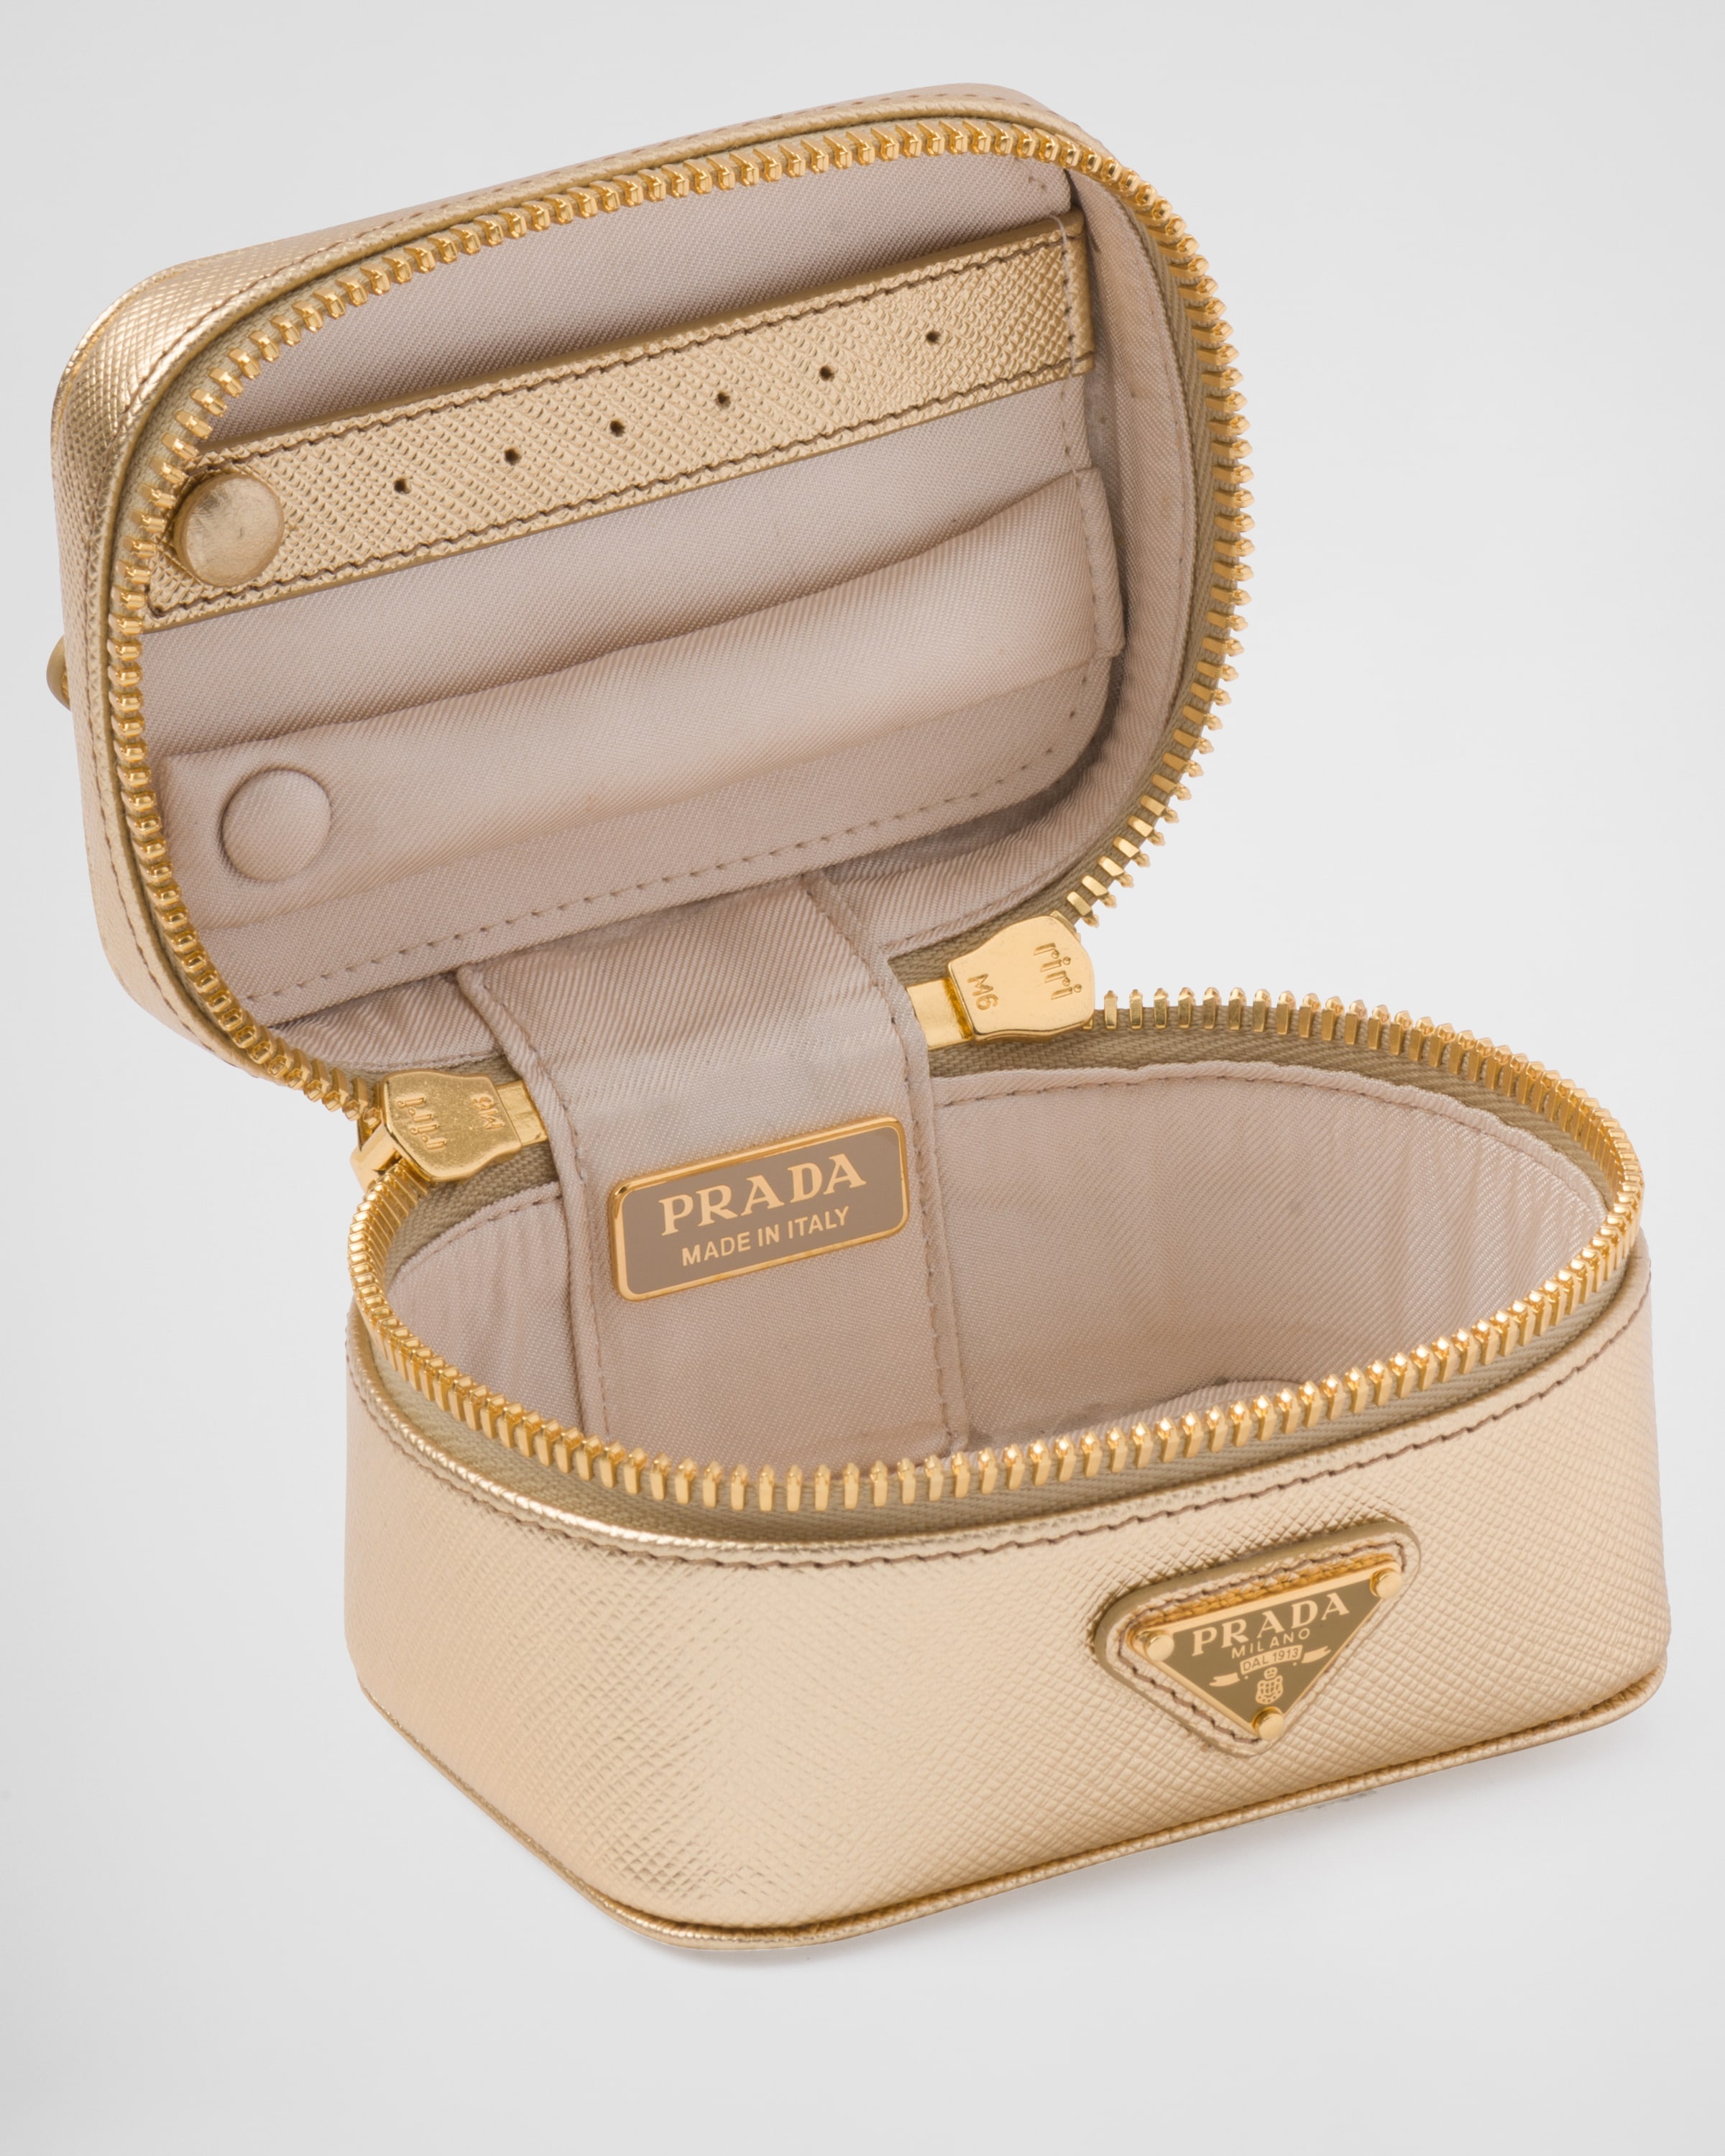 Saffiano leather jewelry beauty case - 3